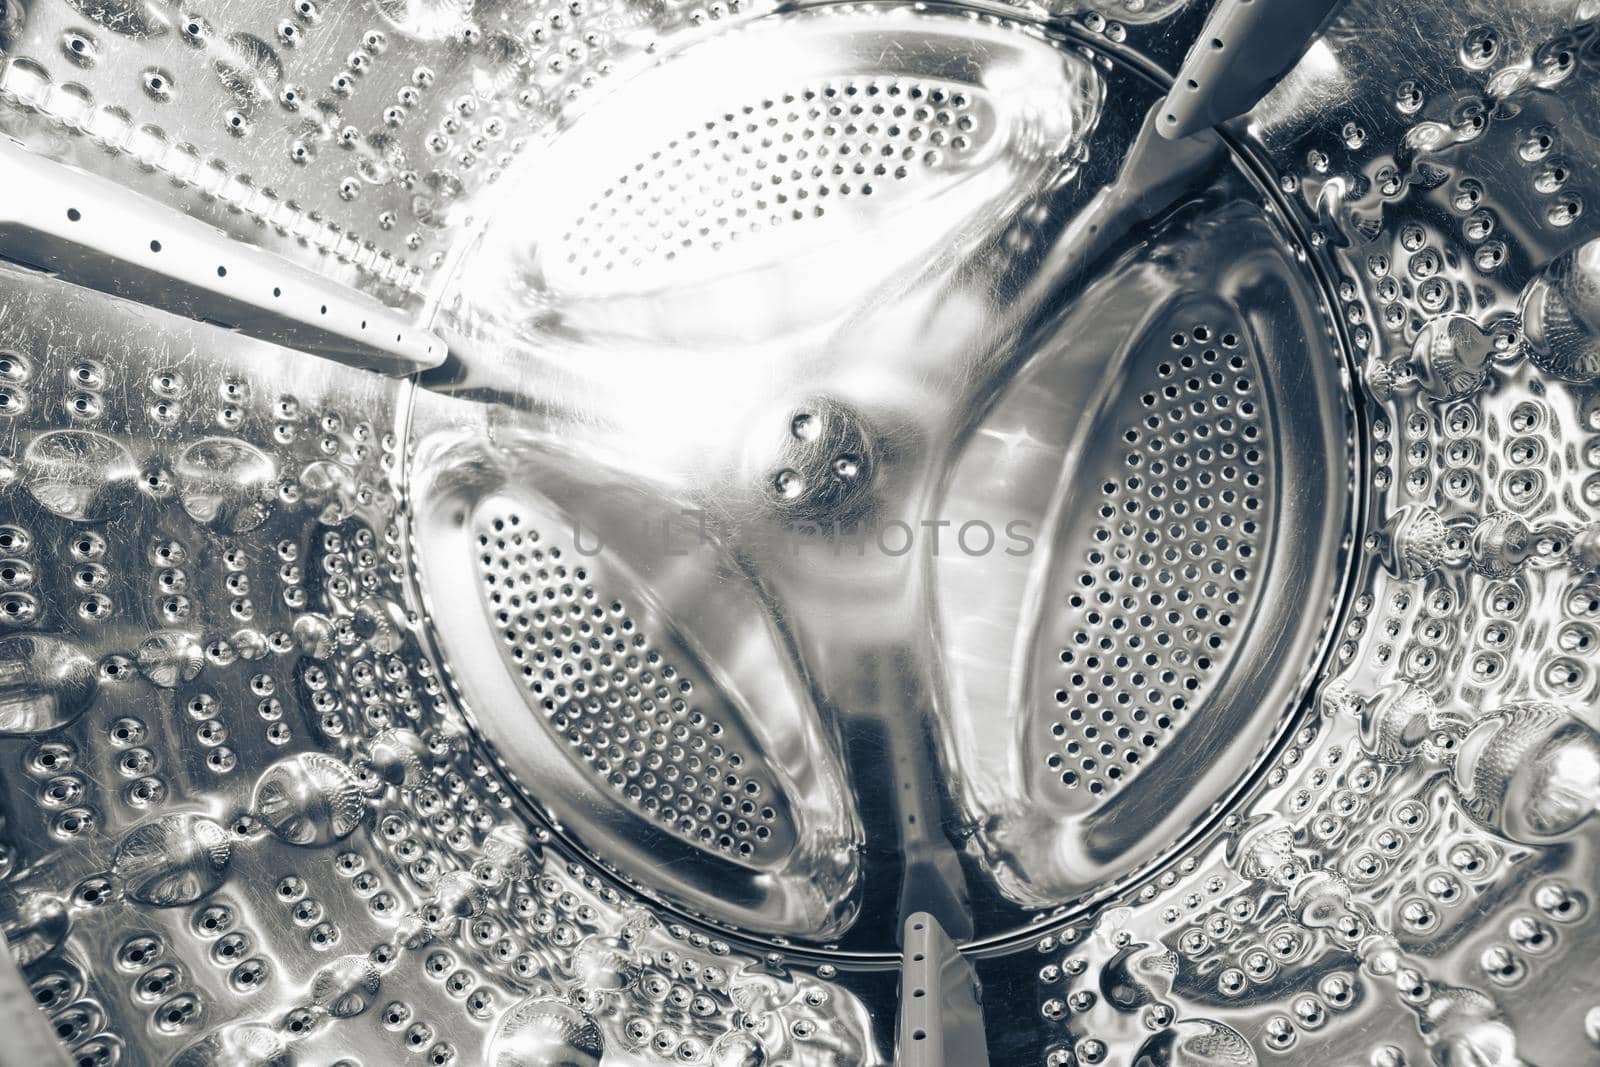 inside of a washing machine drum by nikkytok